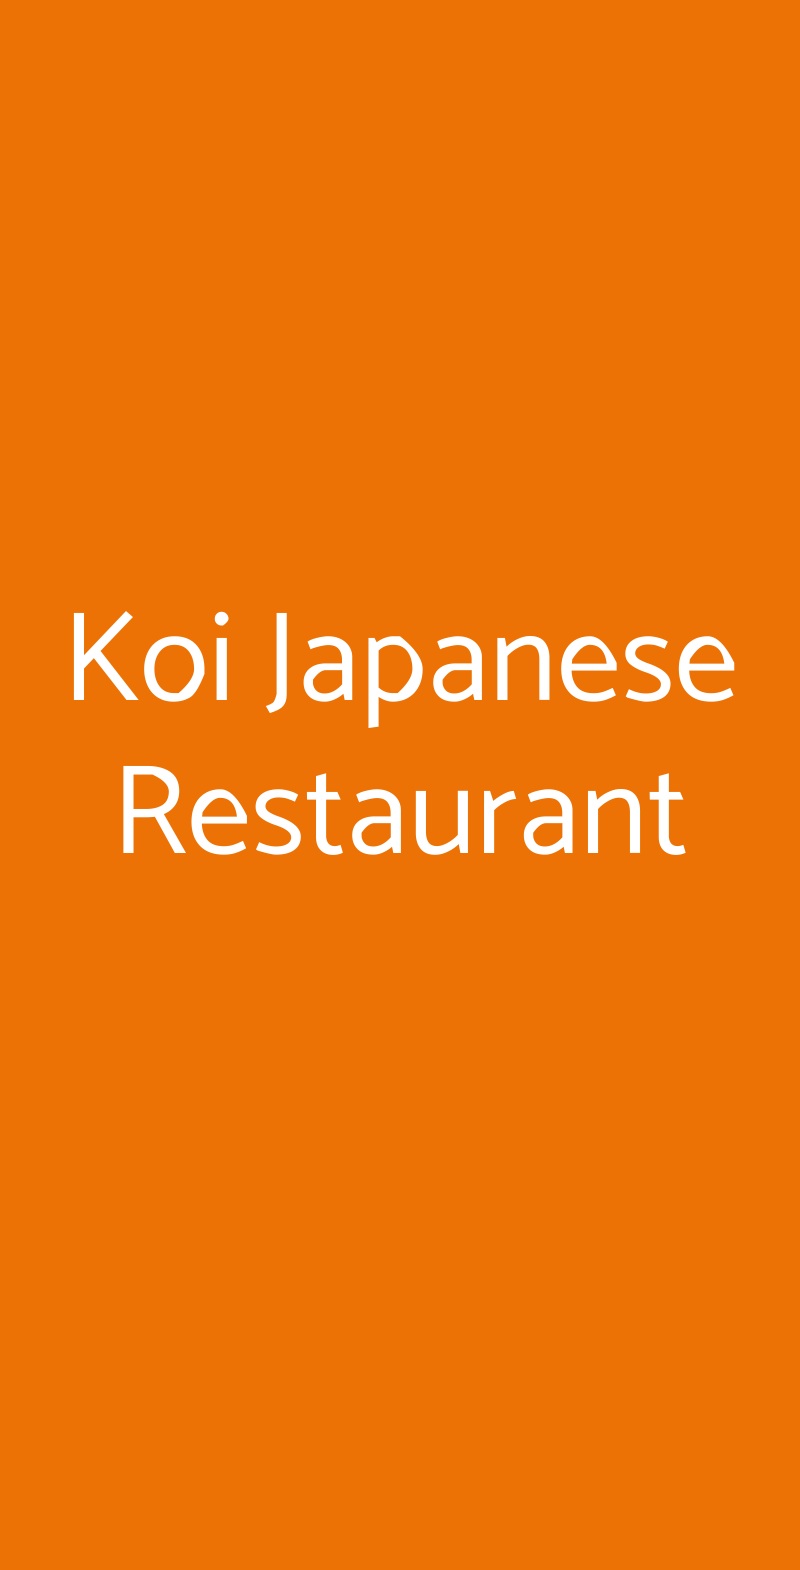 Koi Japanese Restaurant Milano menù 1 pagina